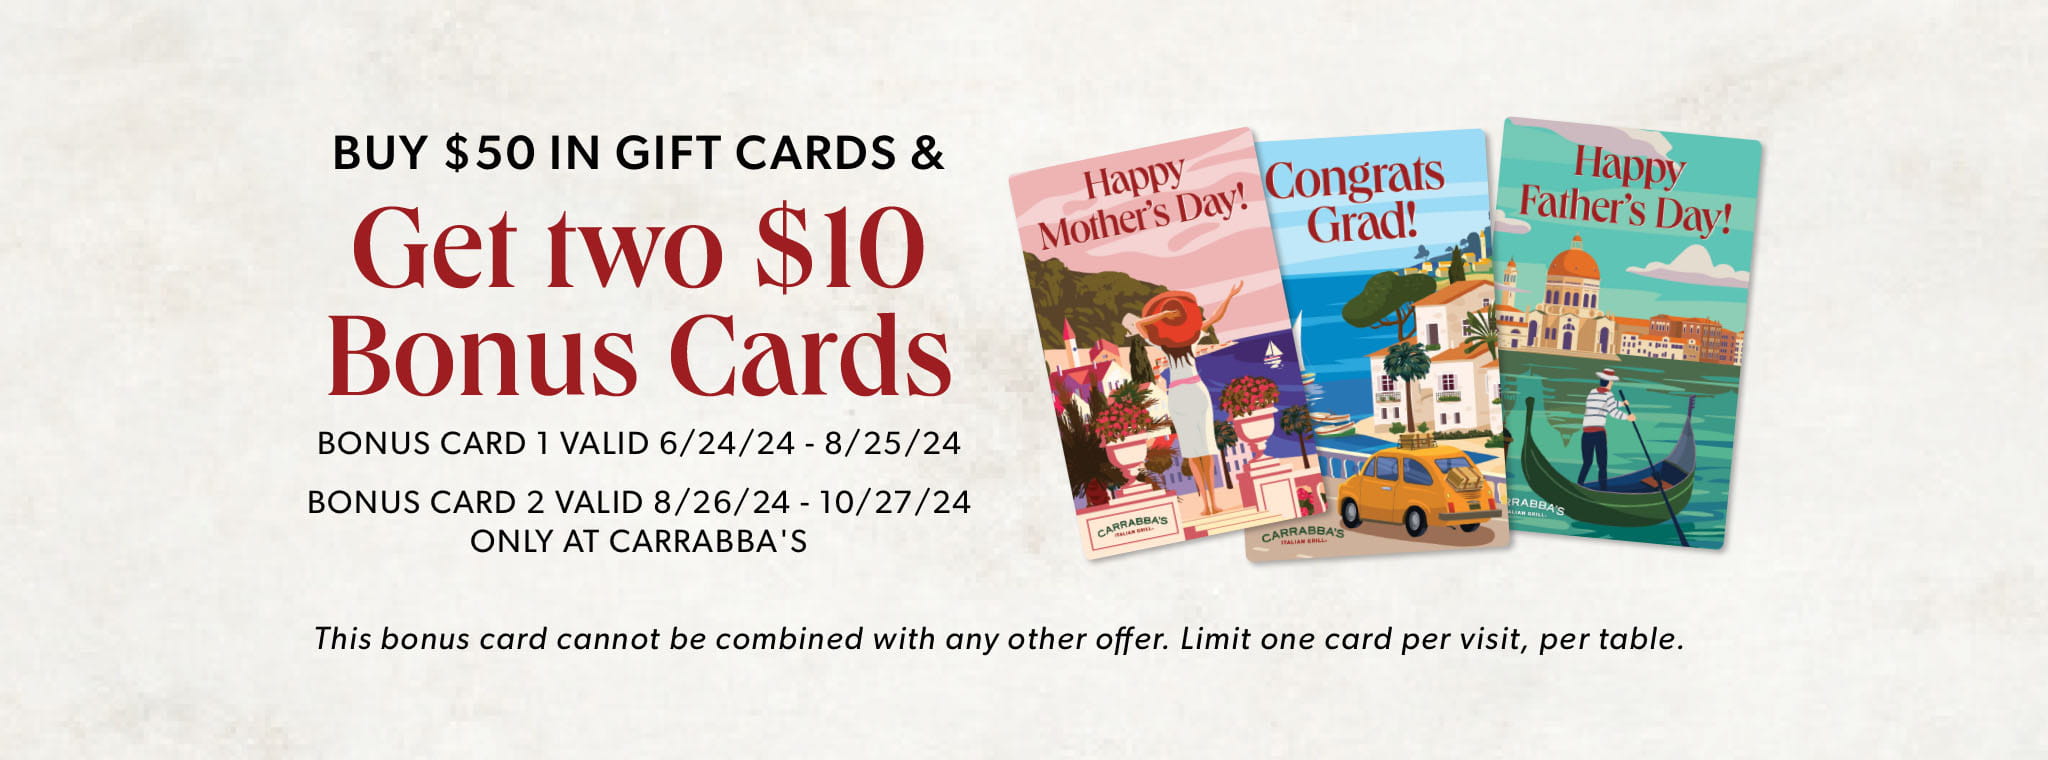 Buy $50 in gift cards & get two $10 bonus cards